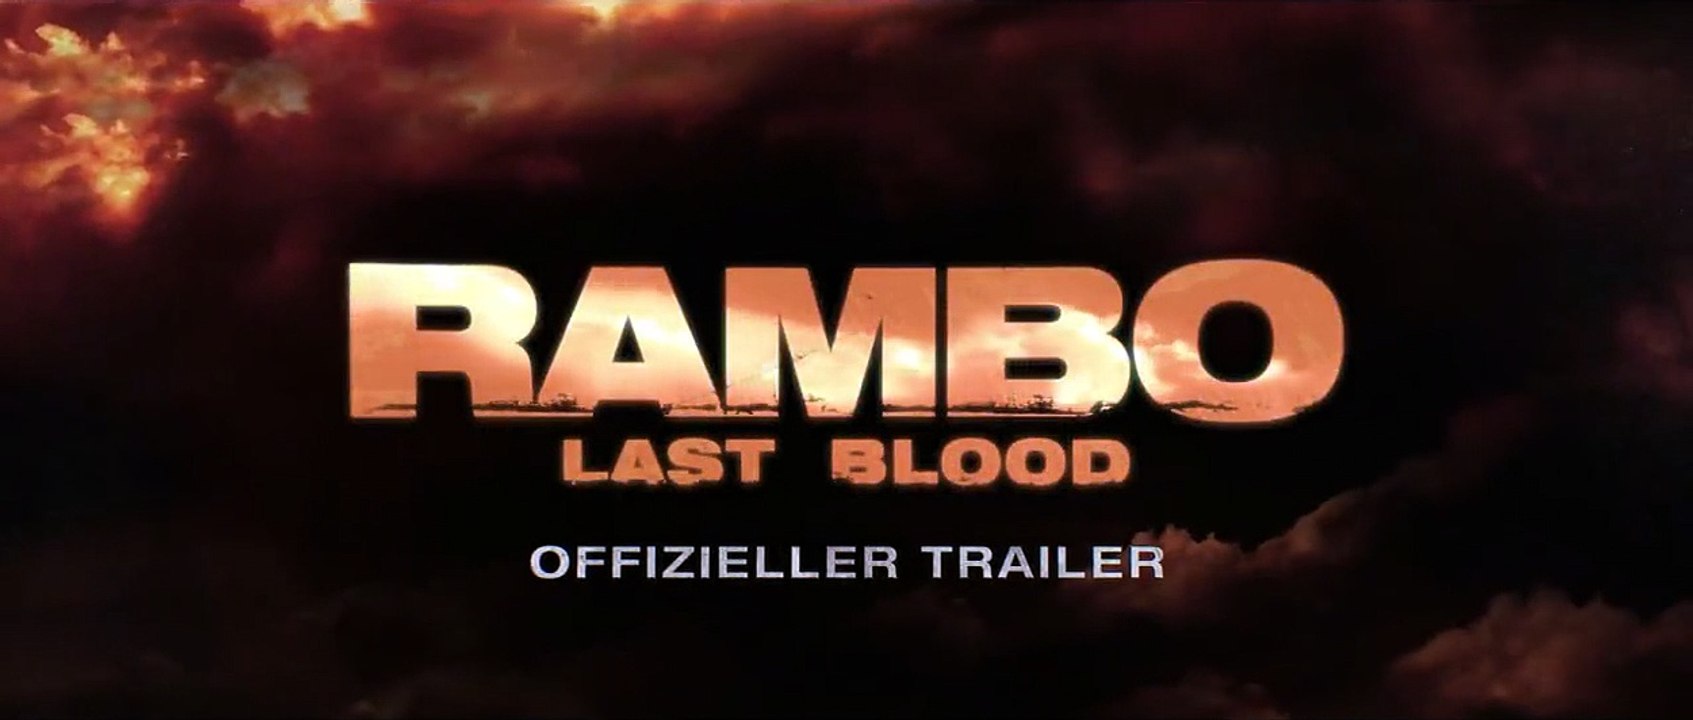 Rambo 5: Last Blood Trailer (2) DF